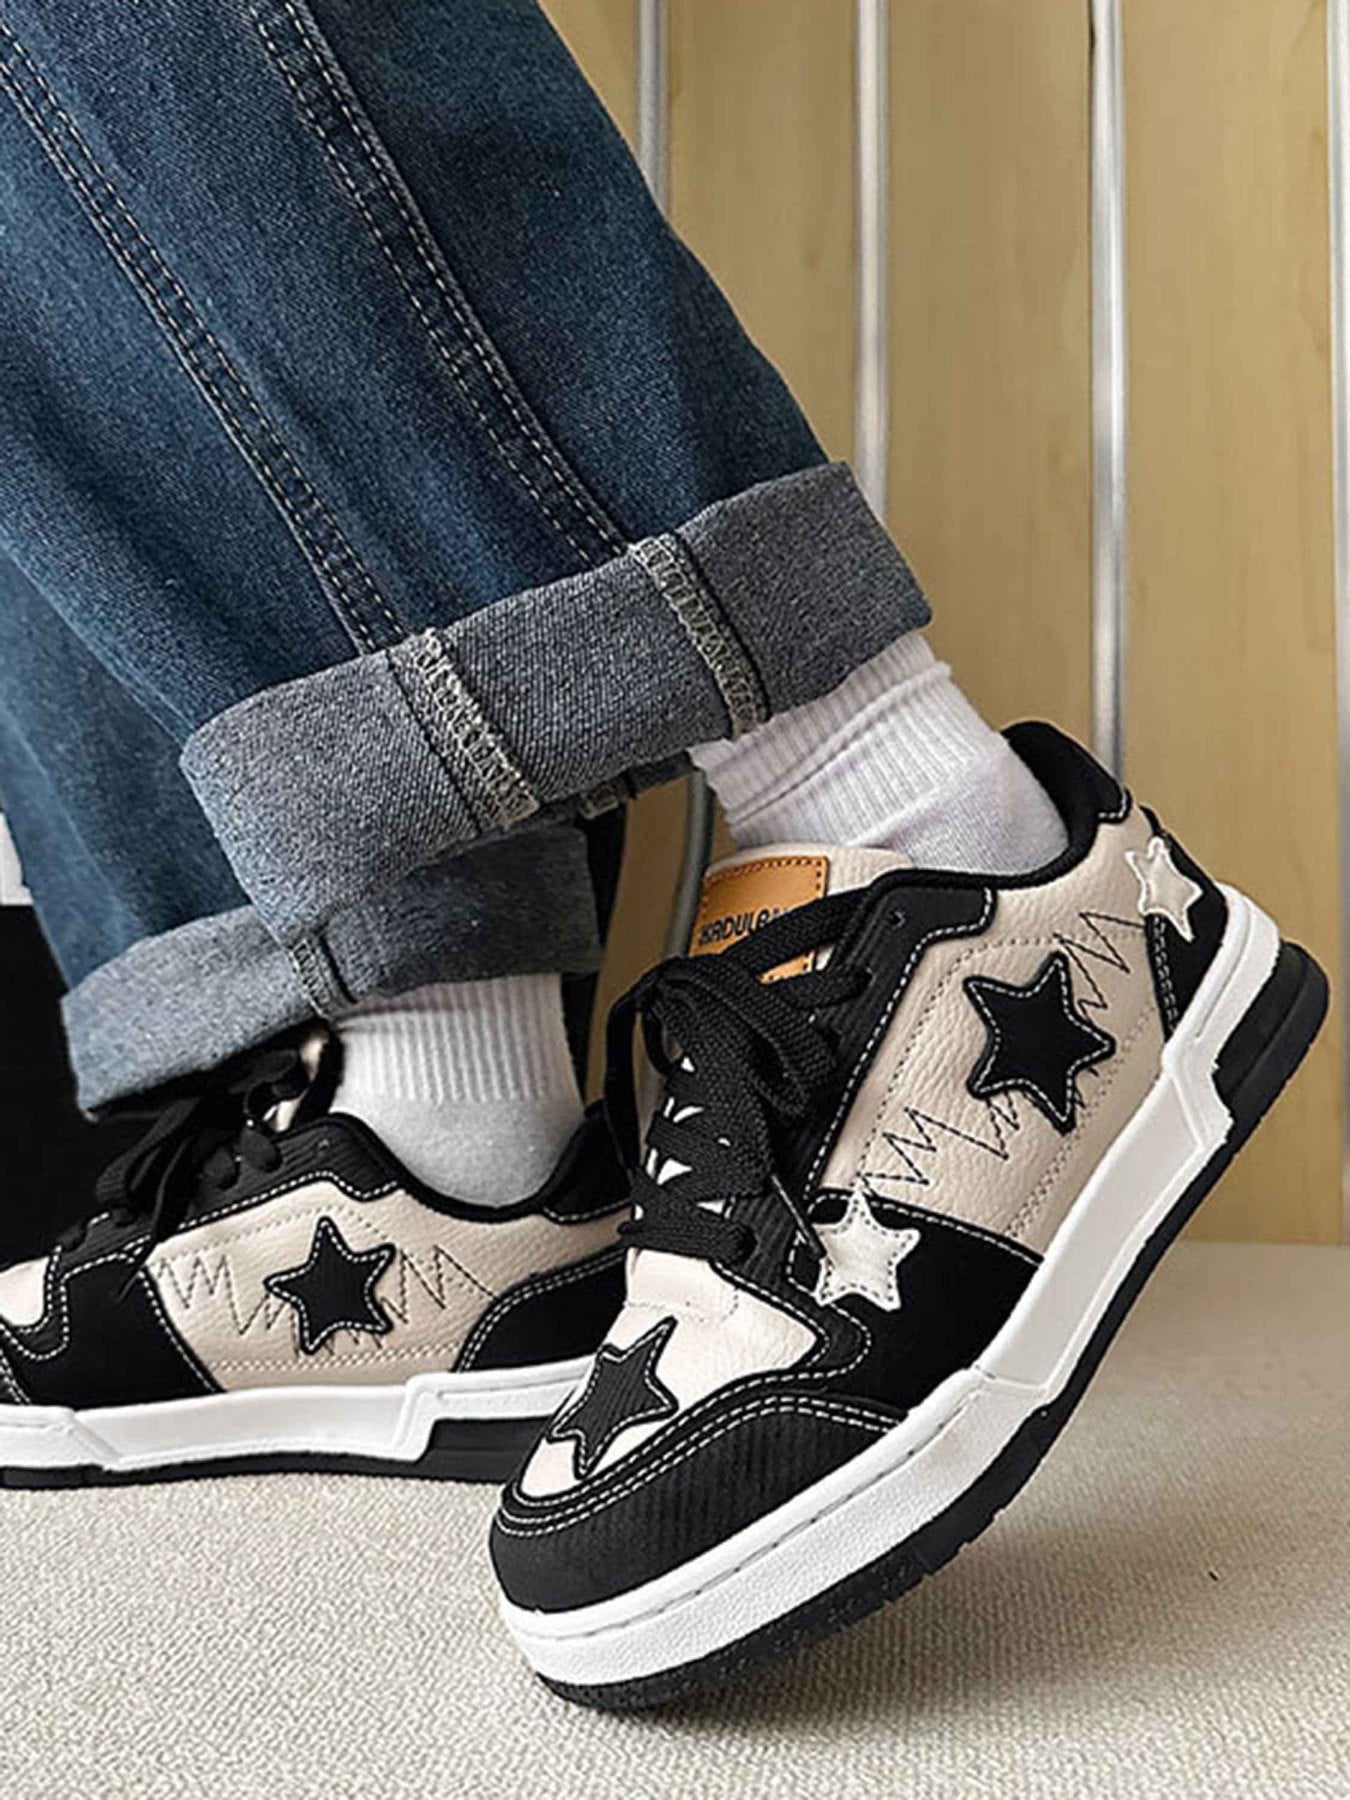 The Supermade Star Peplum Slip-On Shoes